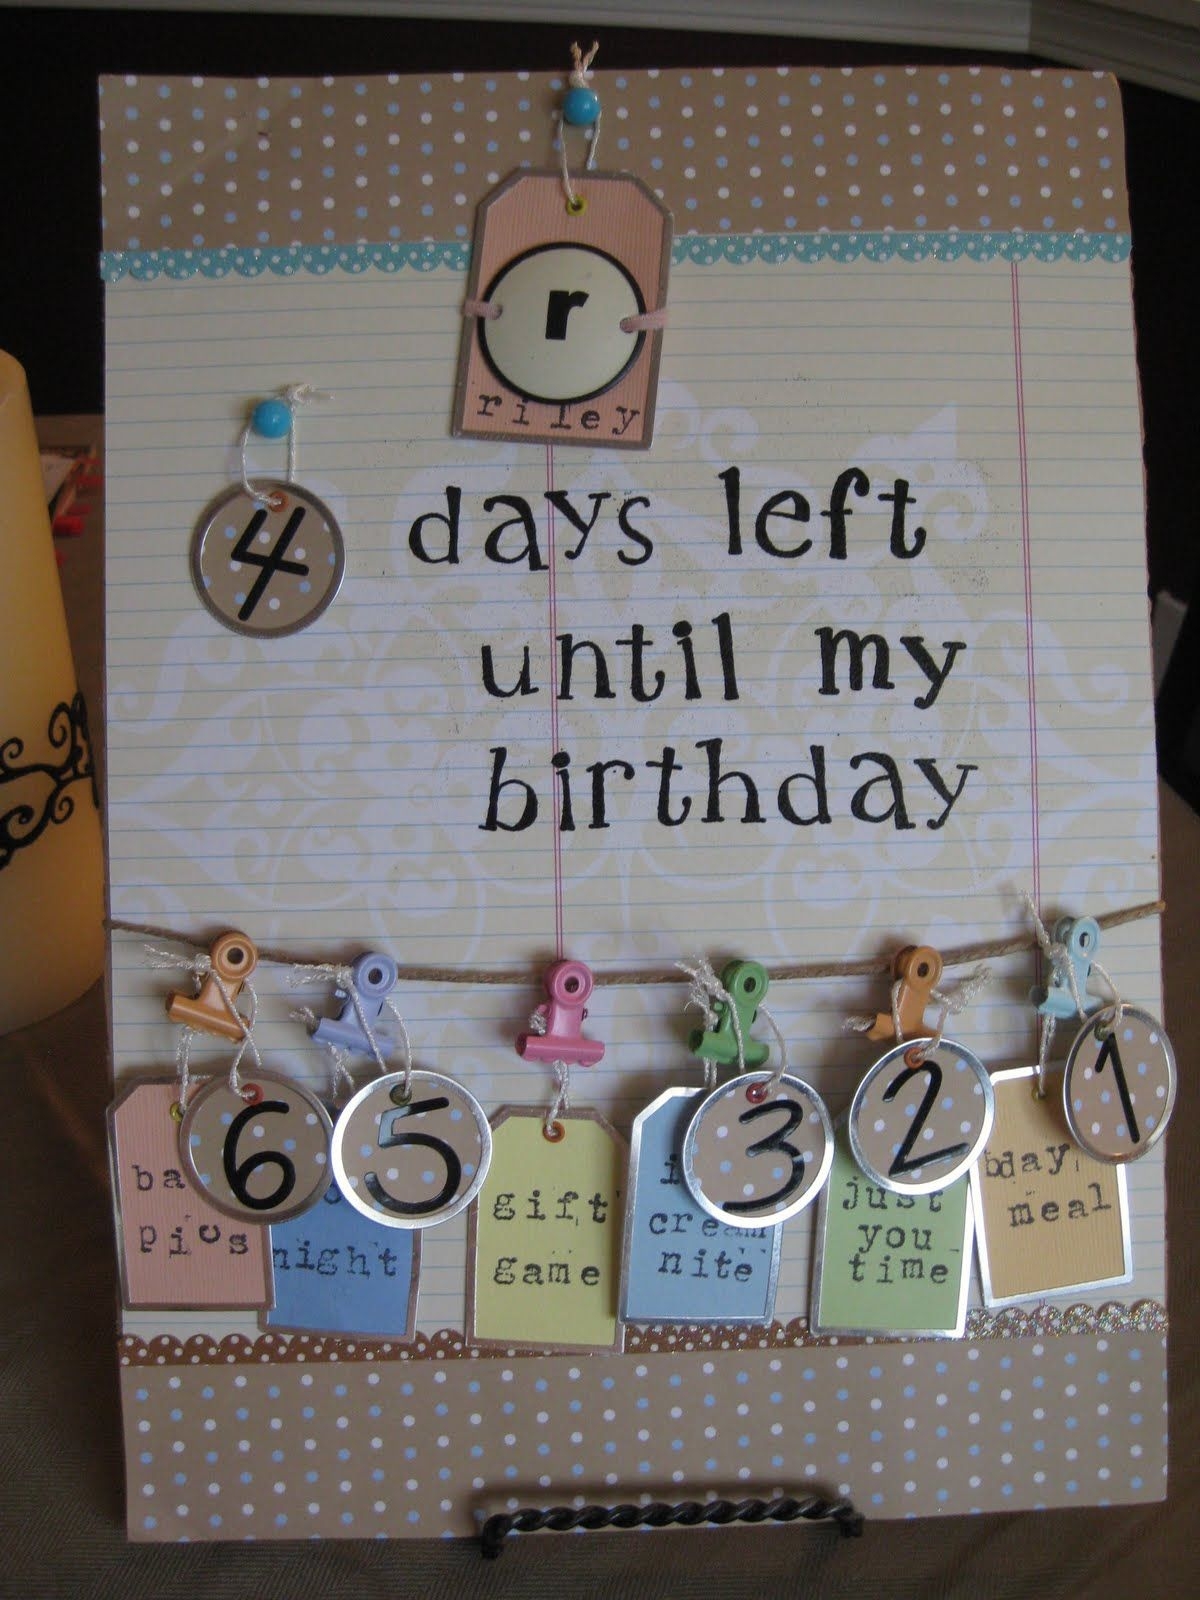 embellishing life: birthday board countdown